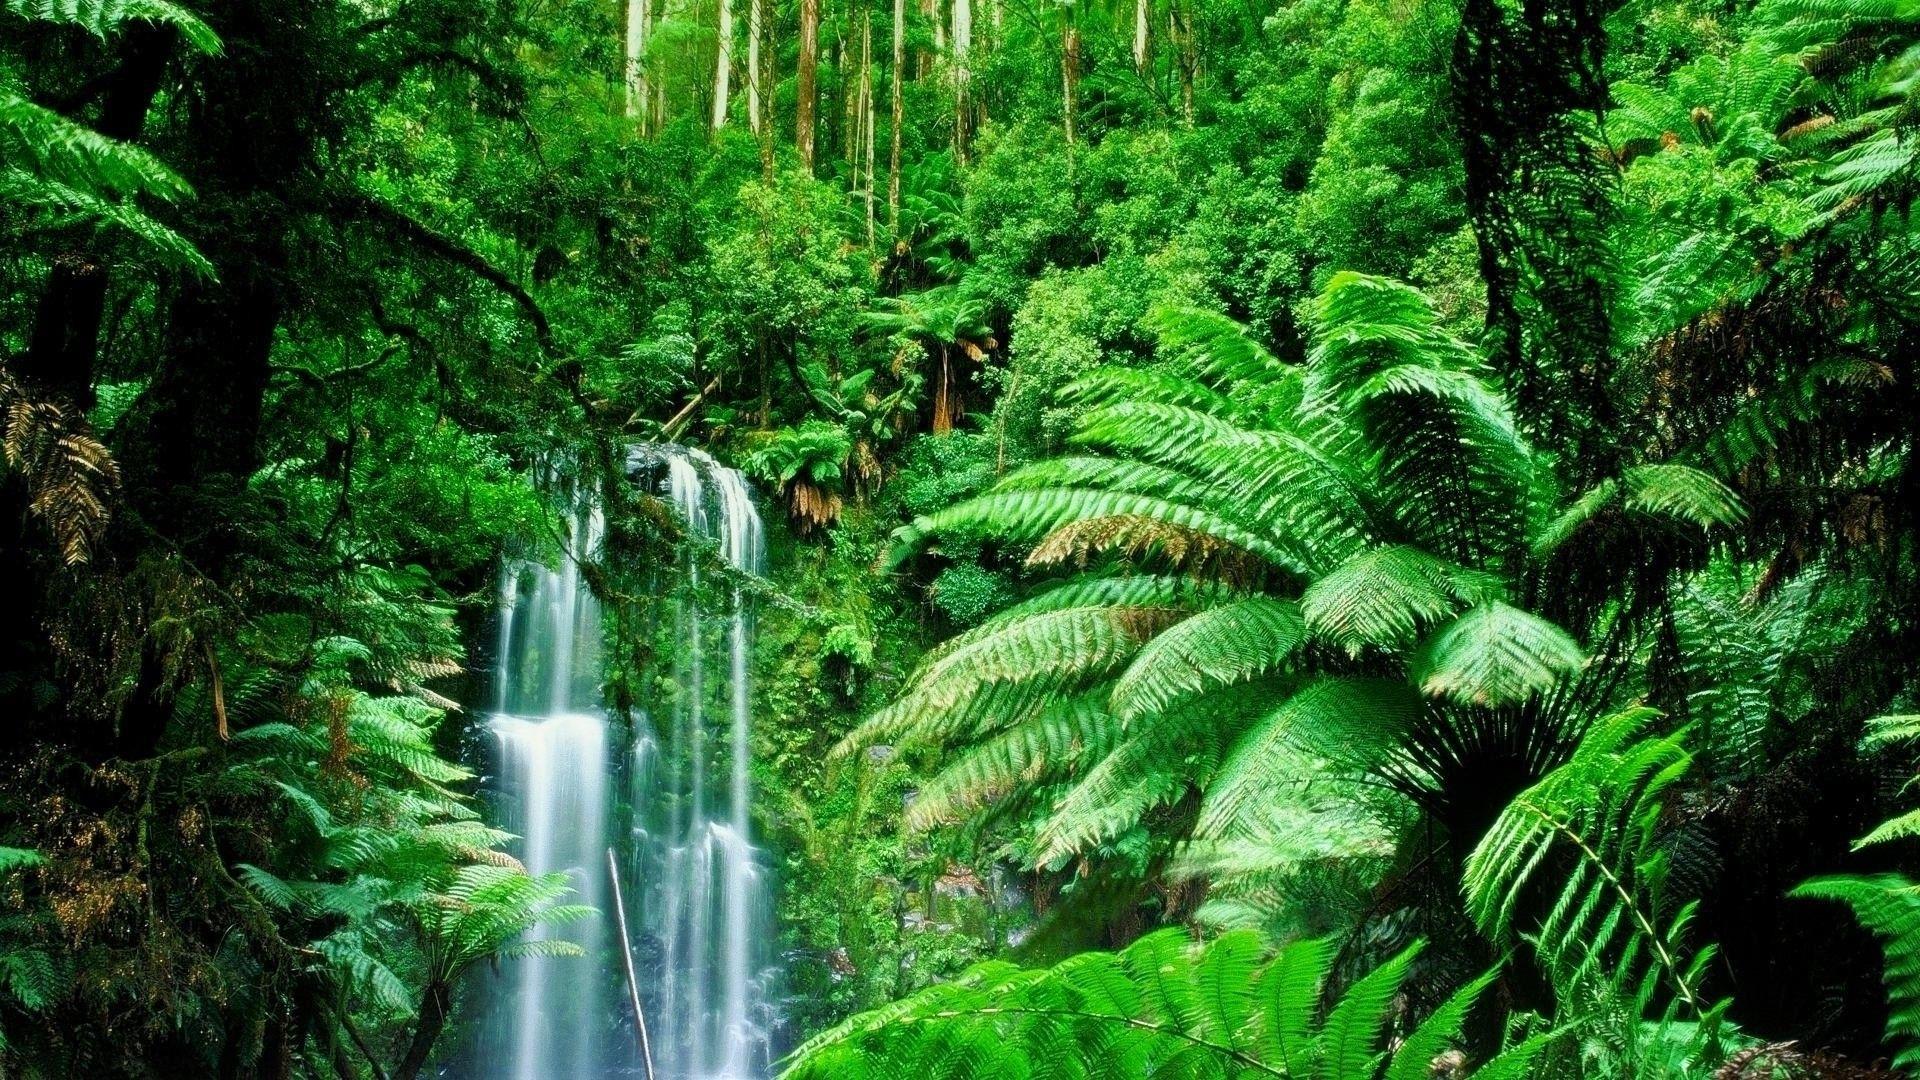 Amazon Rainforest, Feel the Rainfall of Leaves